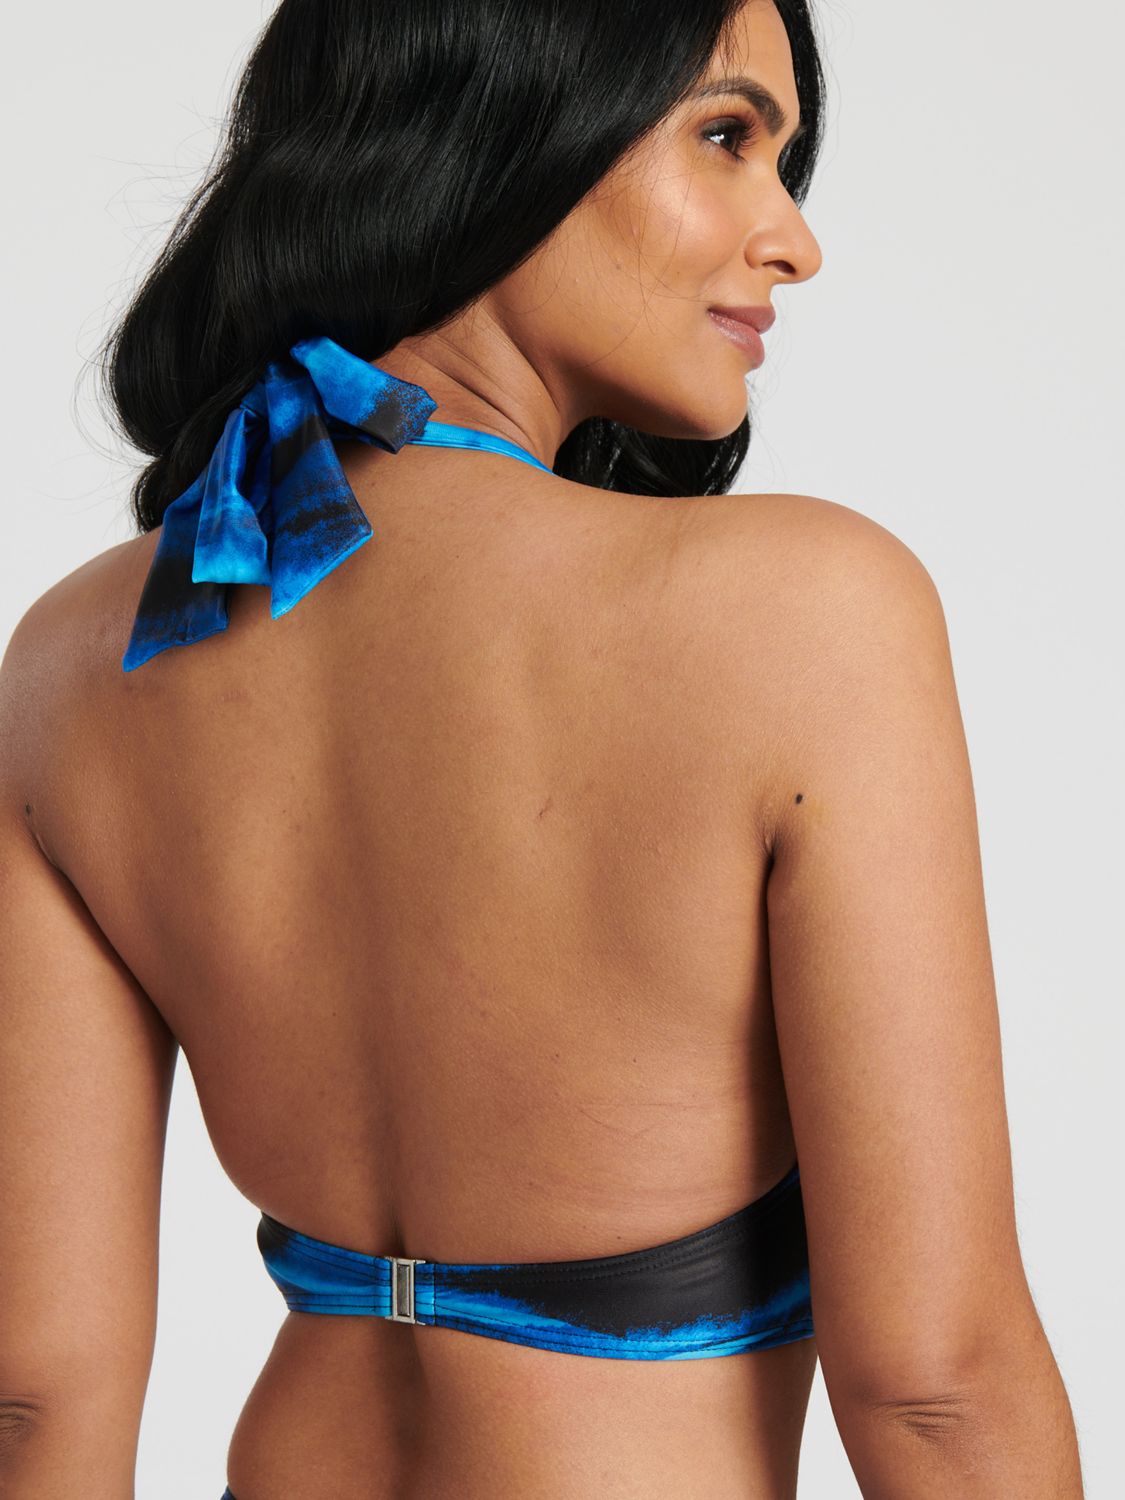 South Beach Printed Twisted Cup Halterneck Bikini Top, Blue/Multi, 8